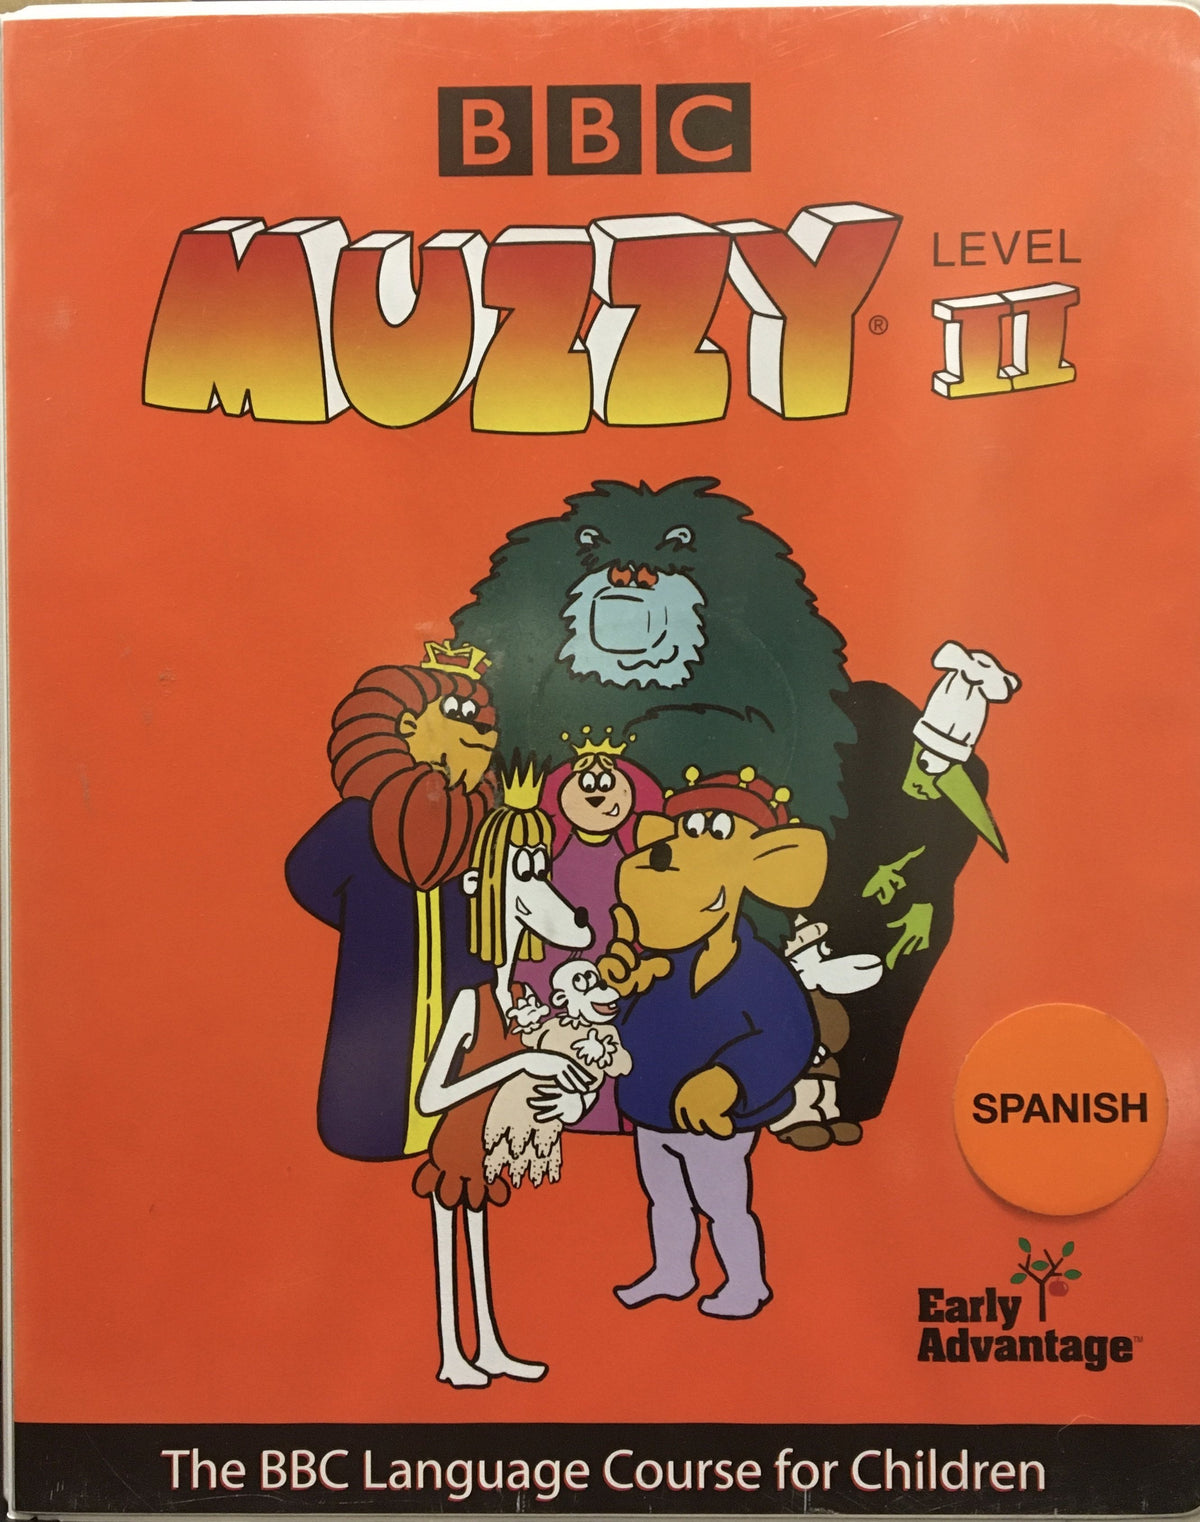 Muzzy Spanish Level 2 DVD - Like new